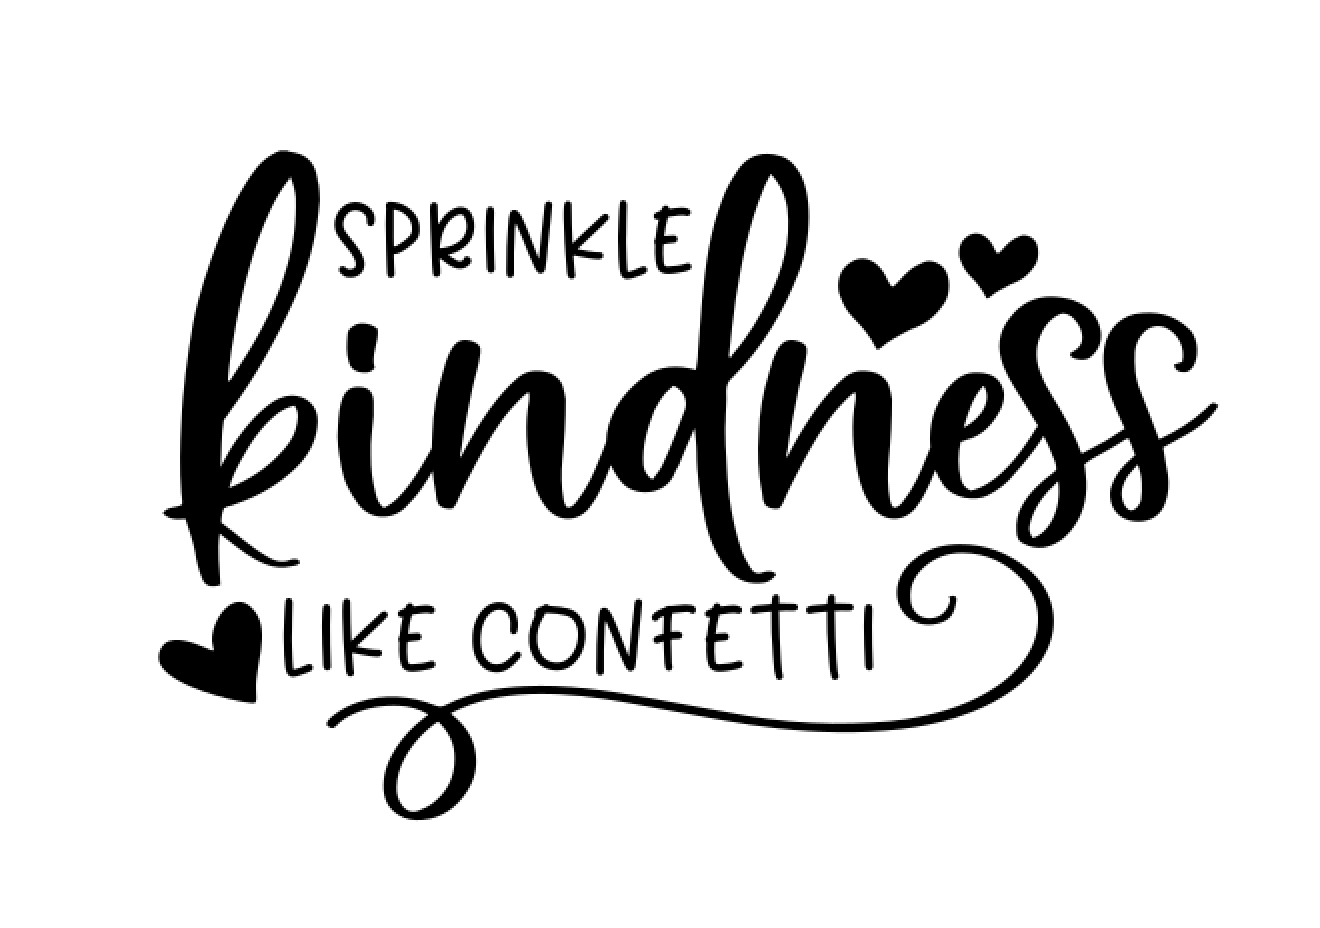 47 Sprinkle kindness like